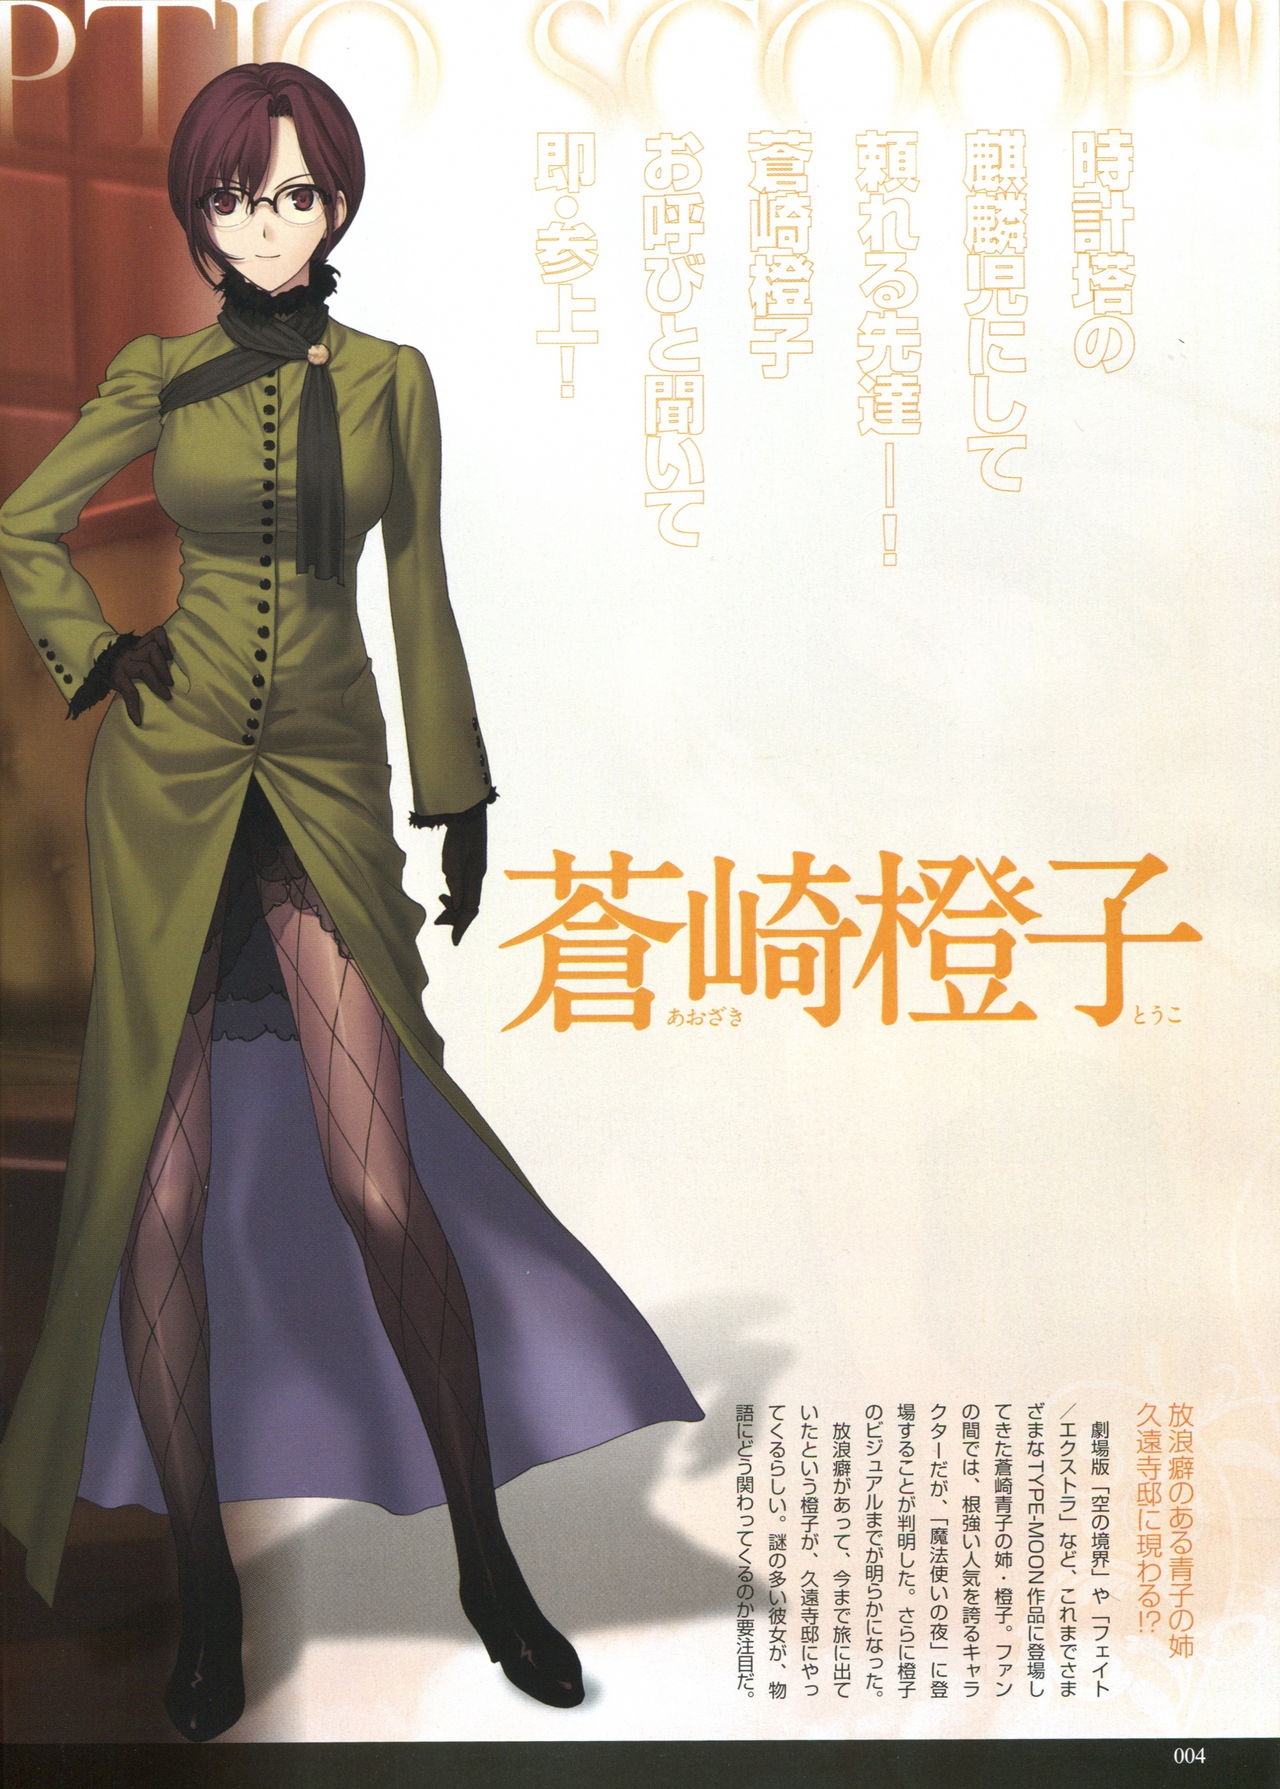 Witch On the Holy Night &Mahoutsukai no Yoru「STARTER VISUAL BOOK」COMP1204 3